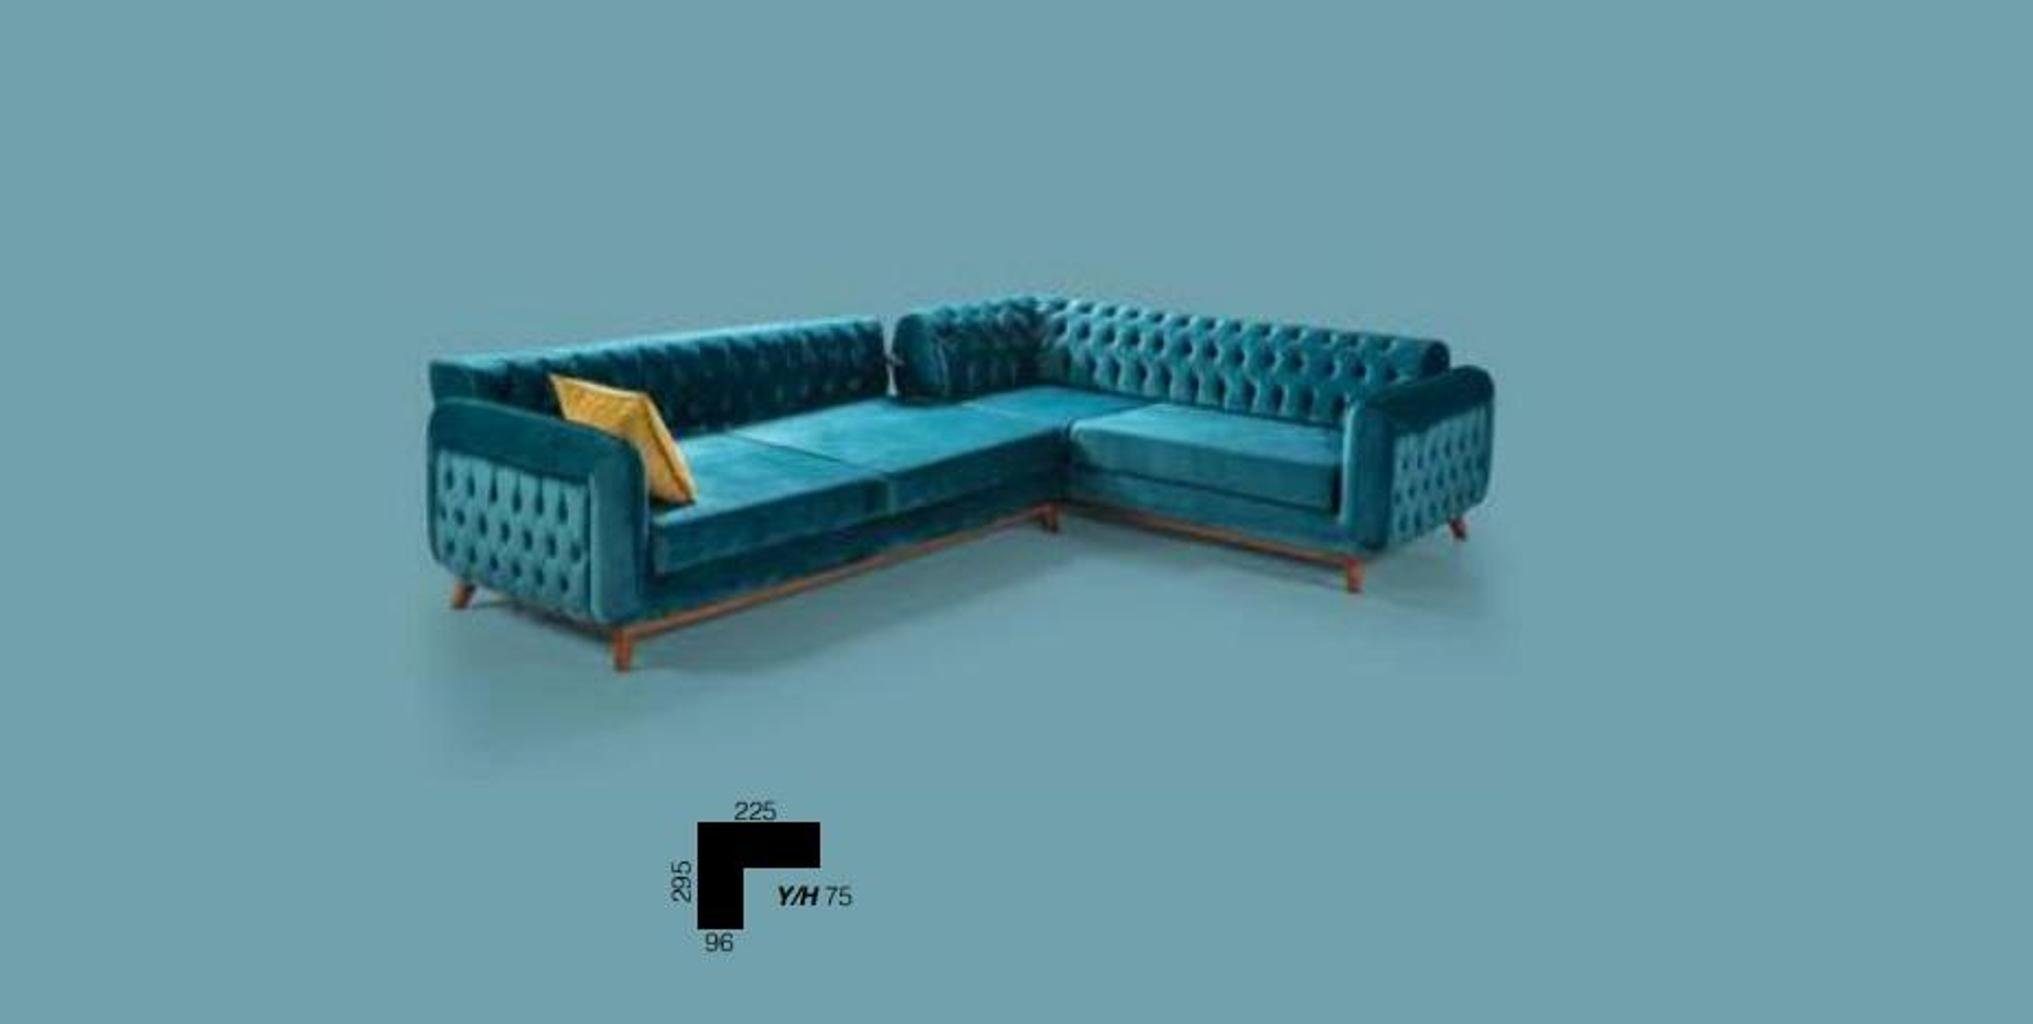 Textil Ecksofa, L-form Couchen Couch Sofa JVmoebel Ecksofa Luxus Wohnlandschaft Polster